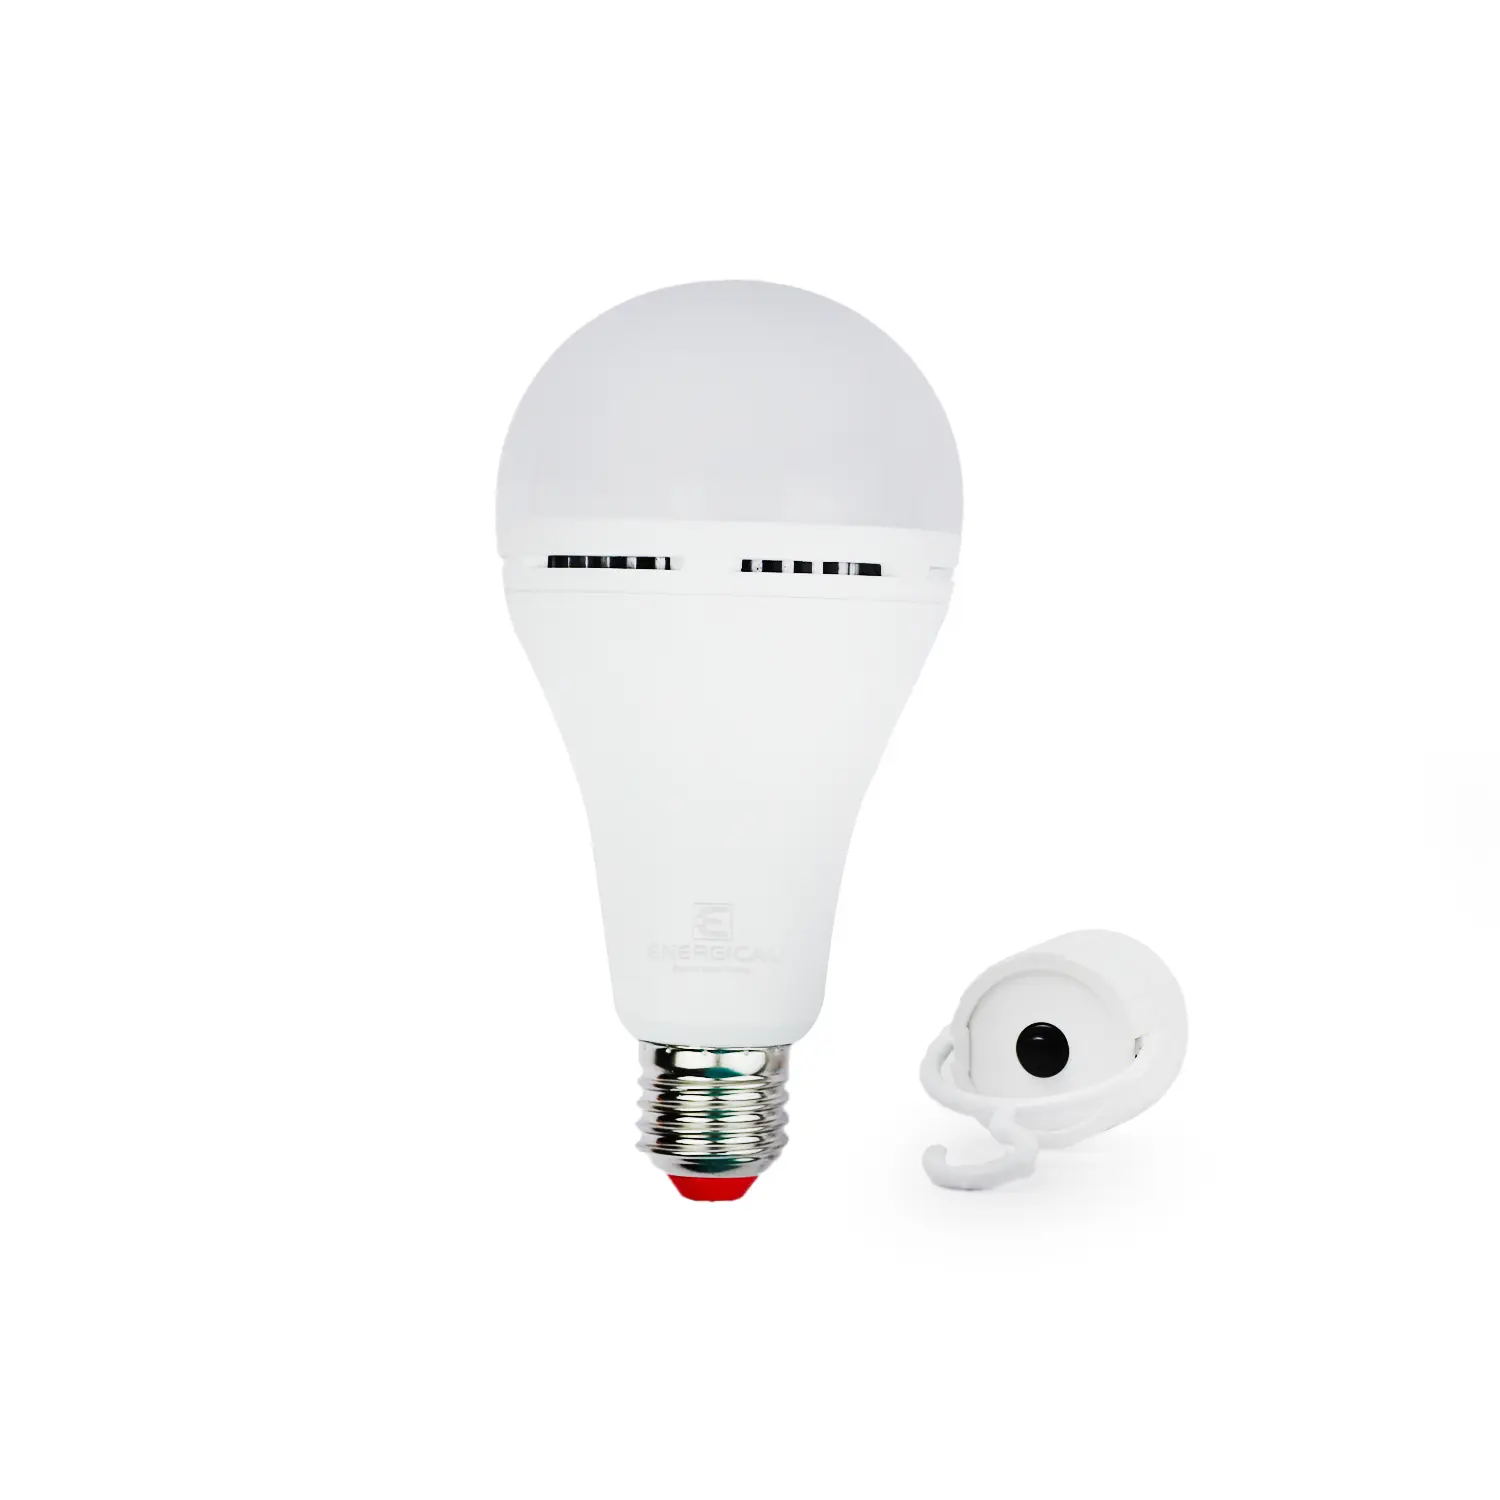 Lampe LED D'urgence 12W - Energical